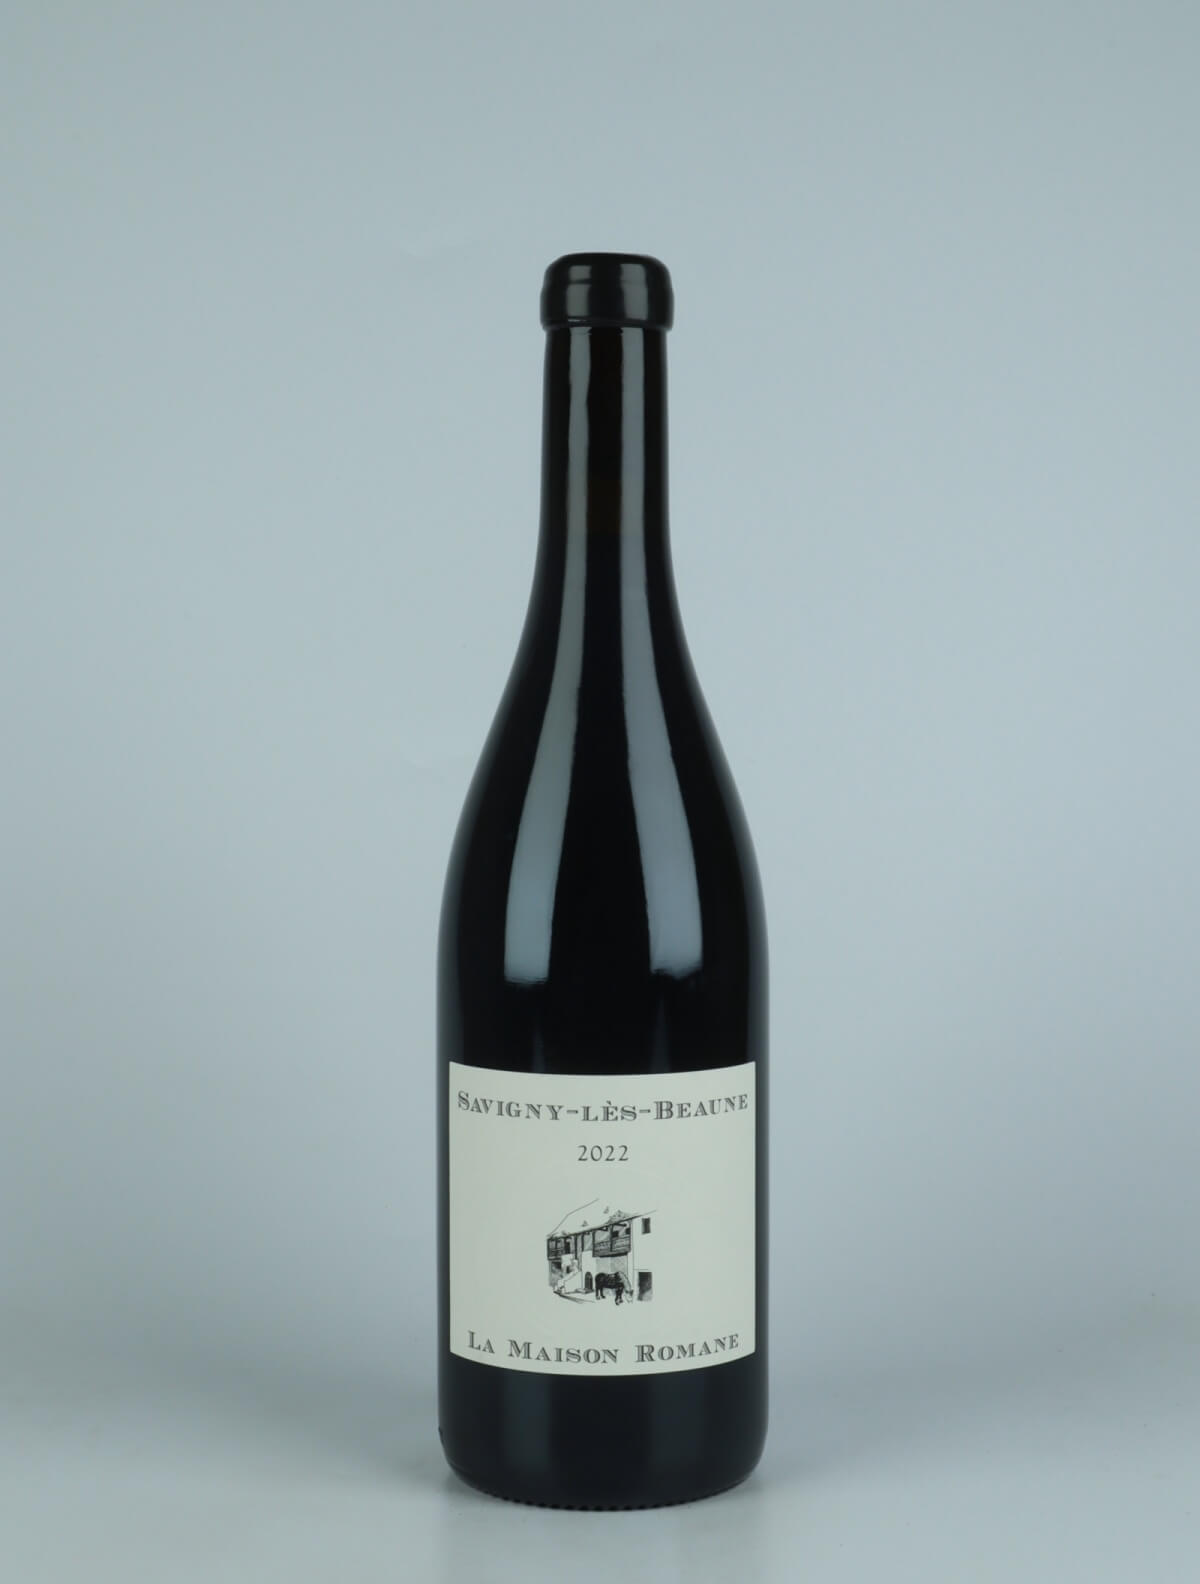 A bottle 2022 Savigny Les Beaune Red wine from La Maison Romane, Burgundy in France